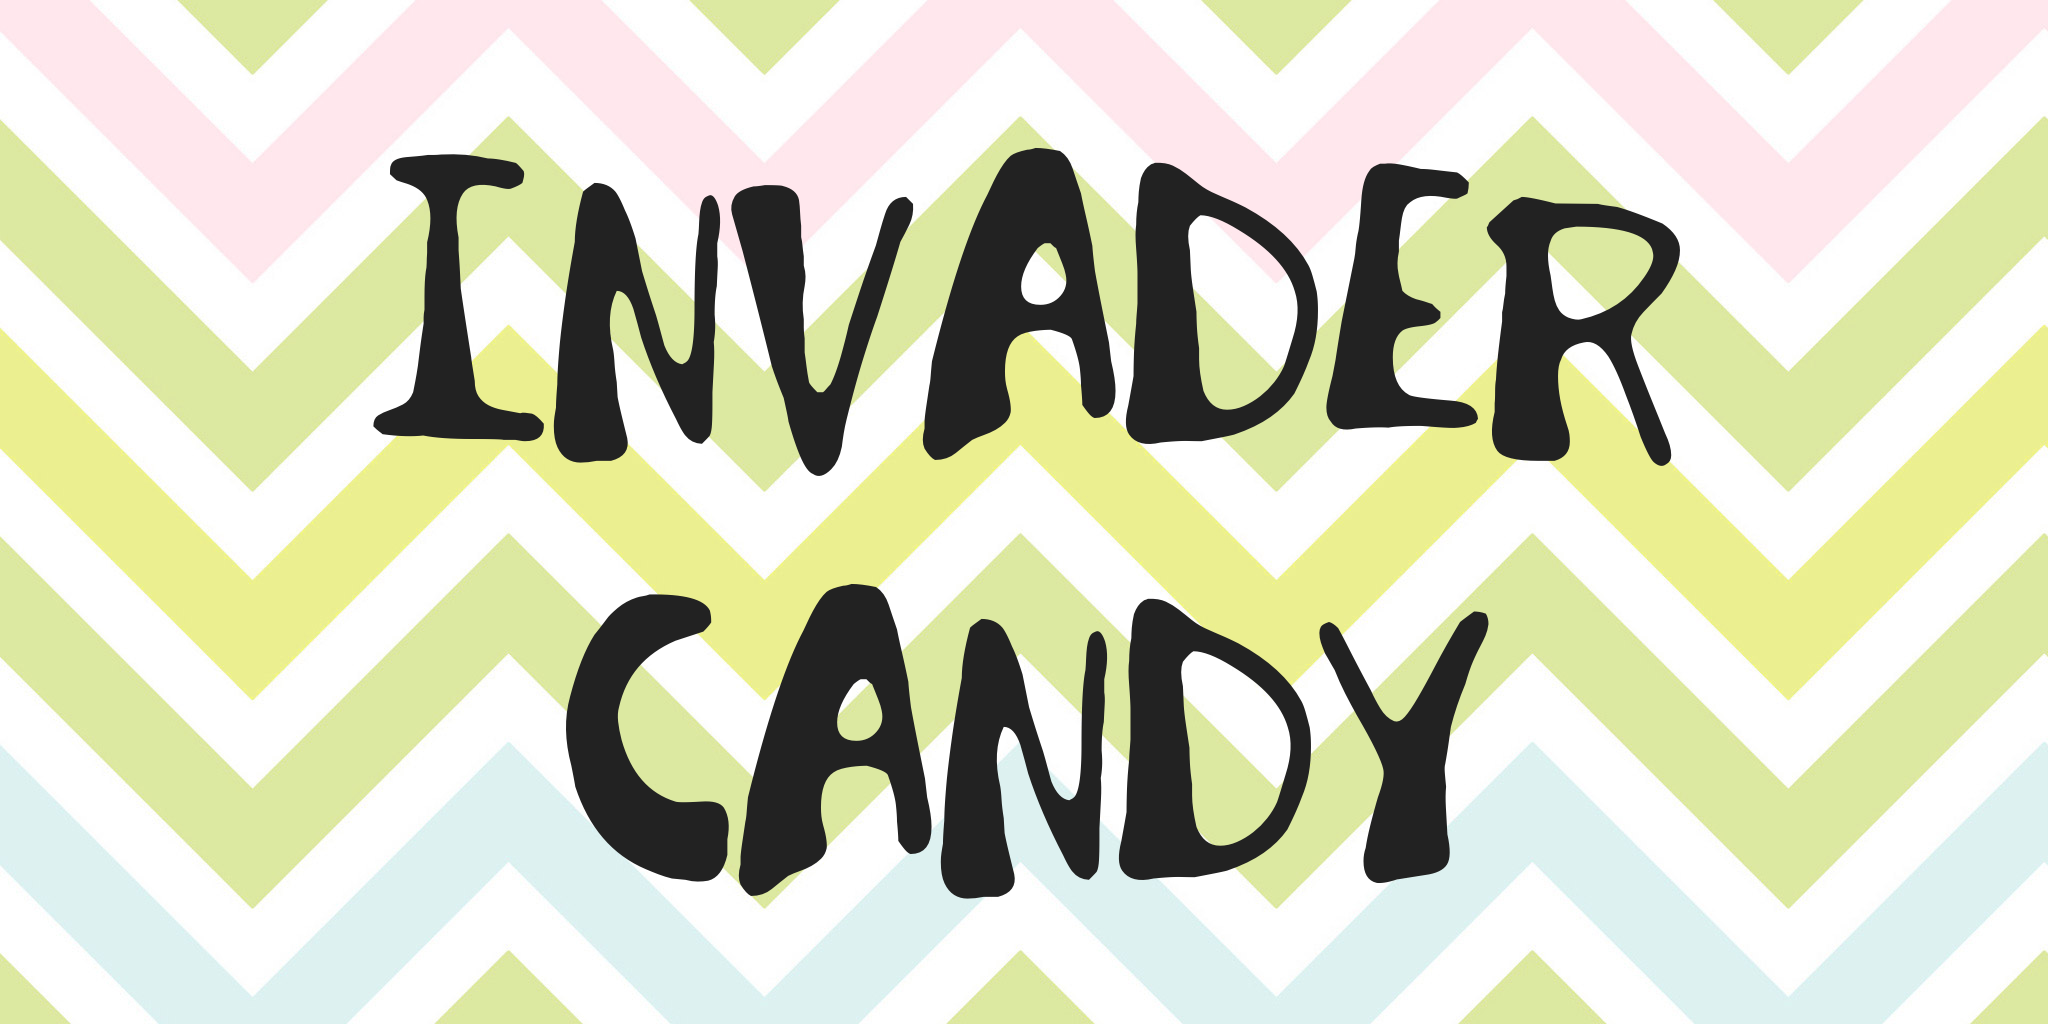 Invader Candy